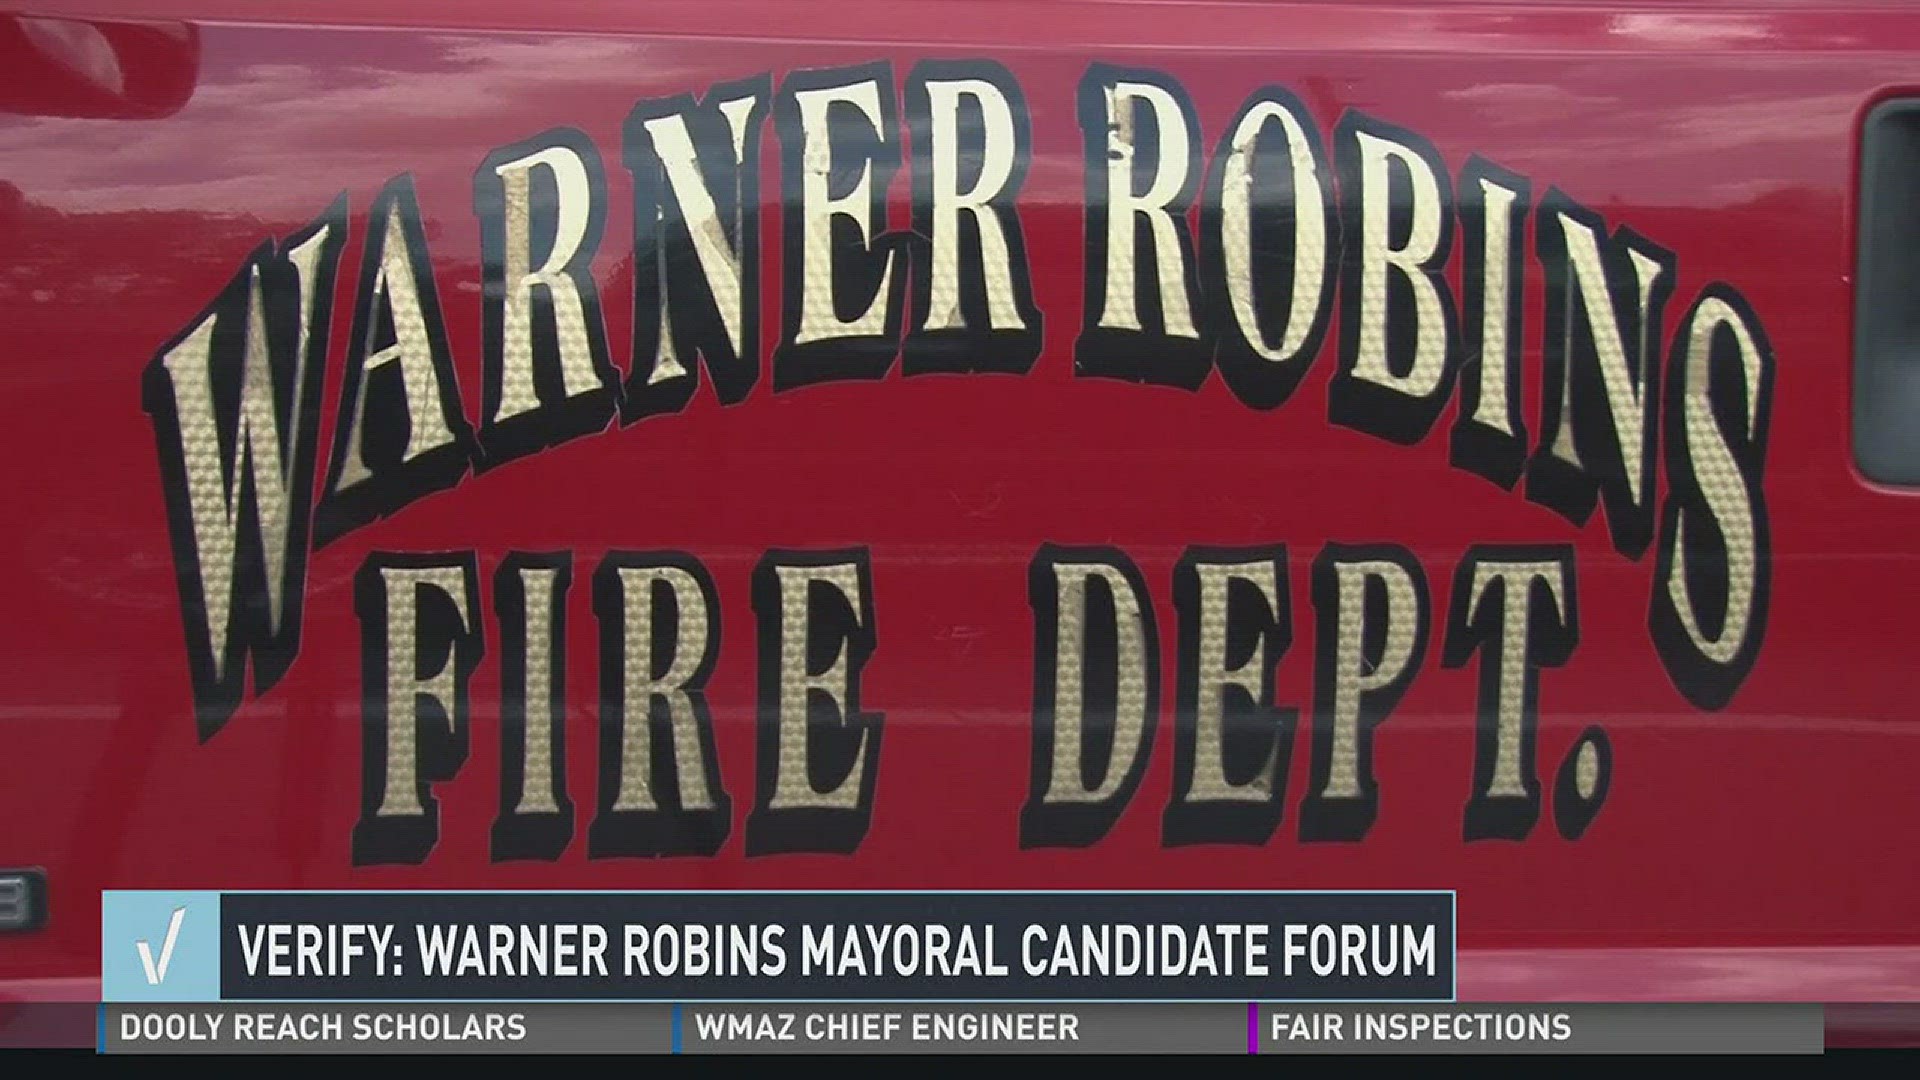 VERIFY: Warner Robins mayoral candidate forum